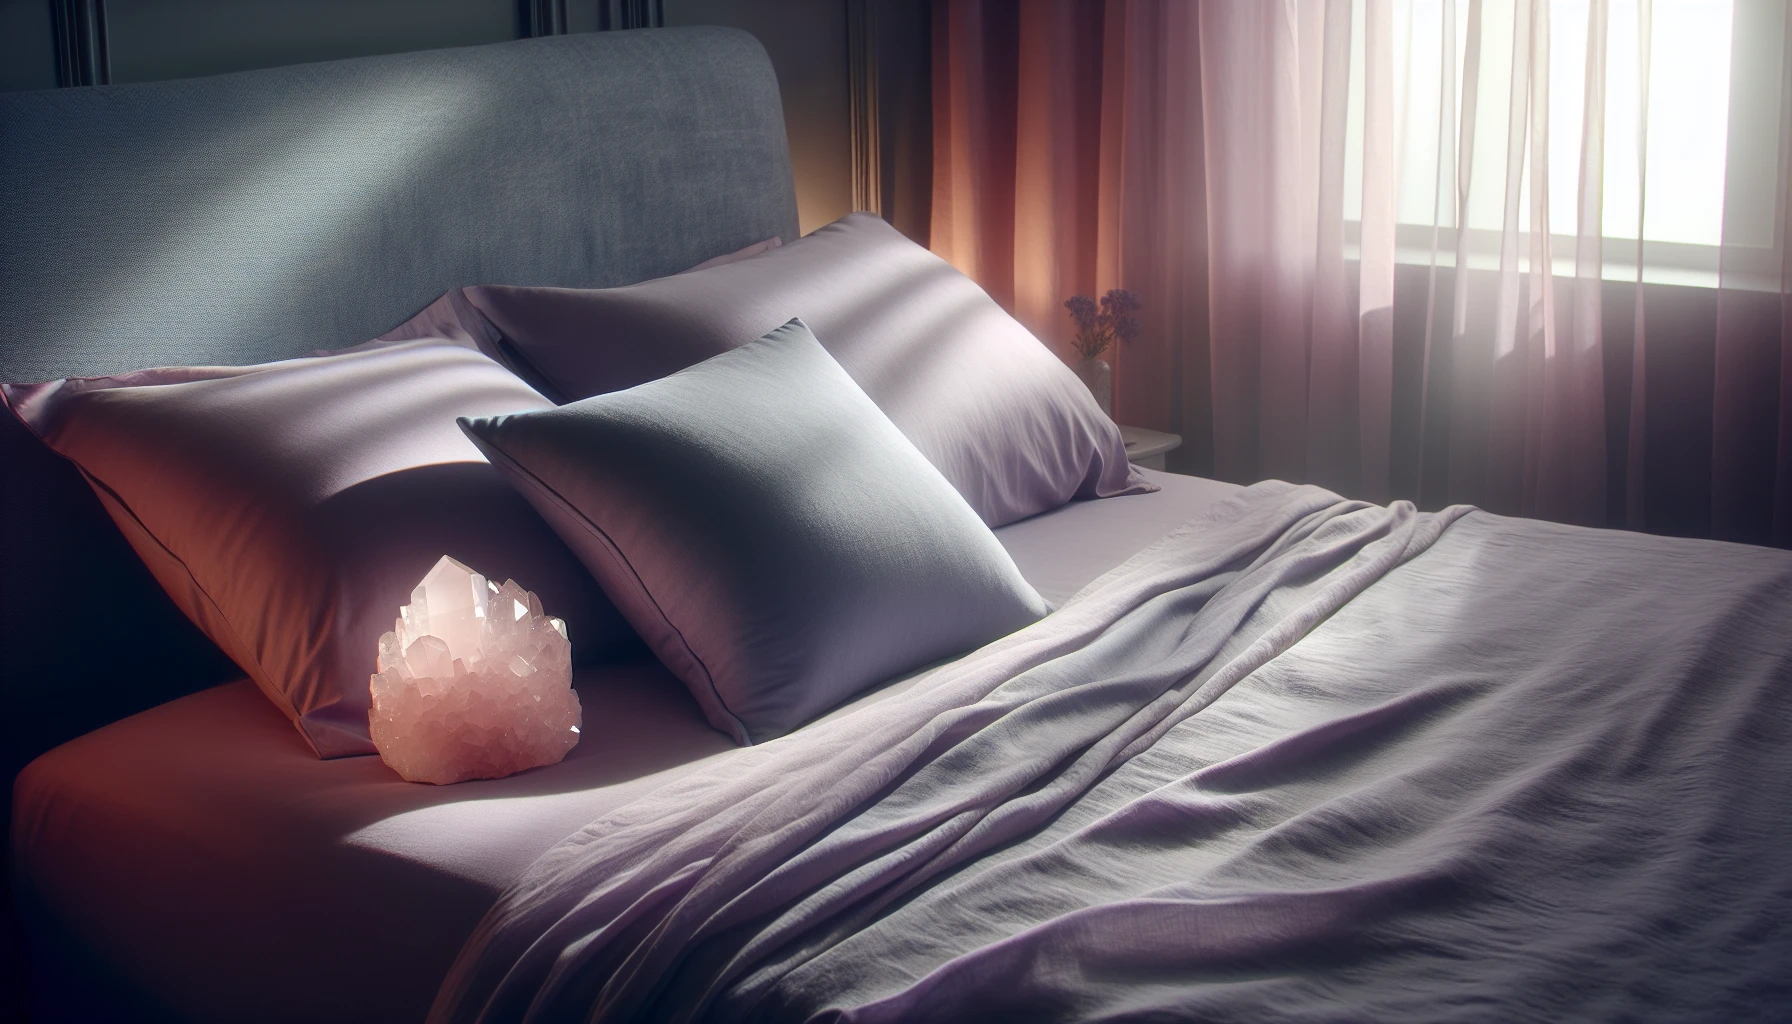 Rose quartz crystal under a pillow